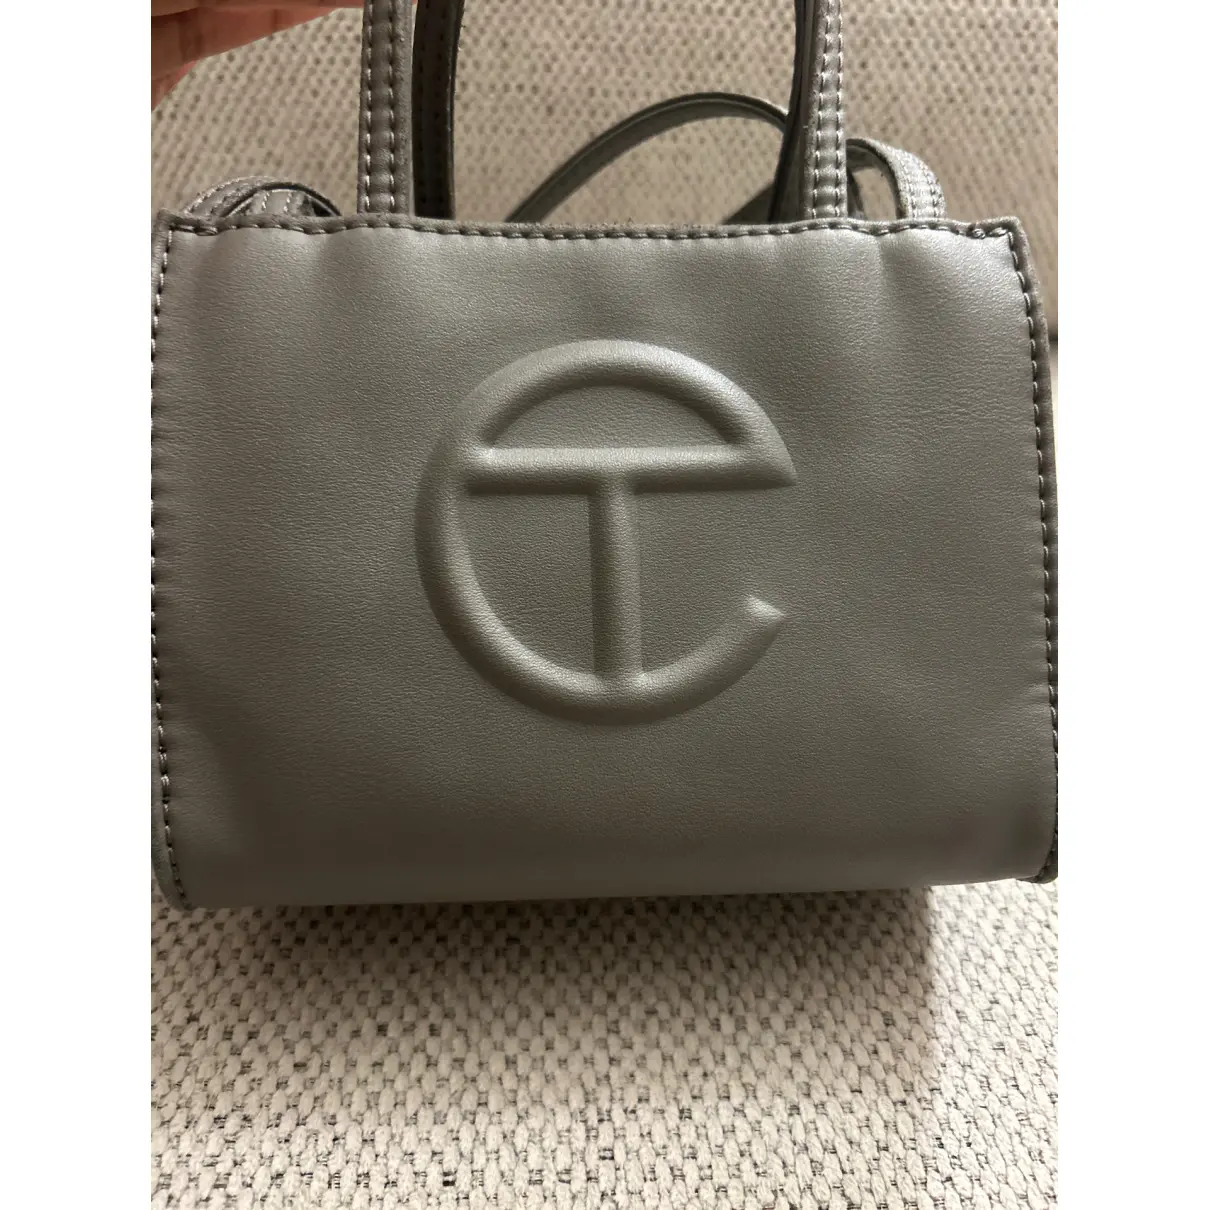 Buy Telfar Small Shopping Bag tote online